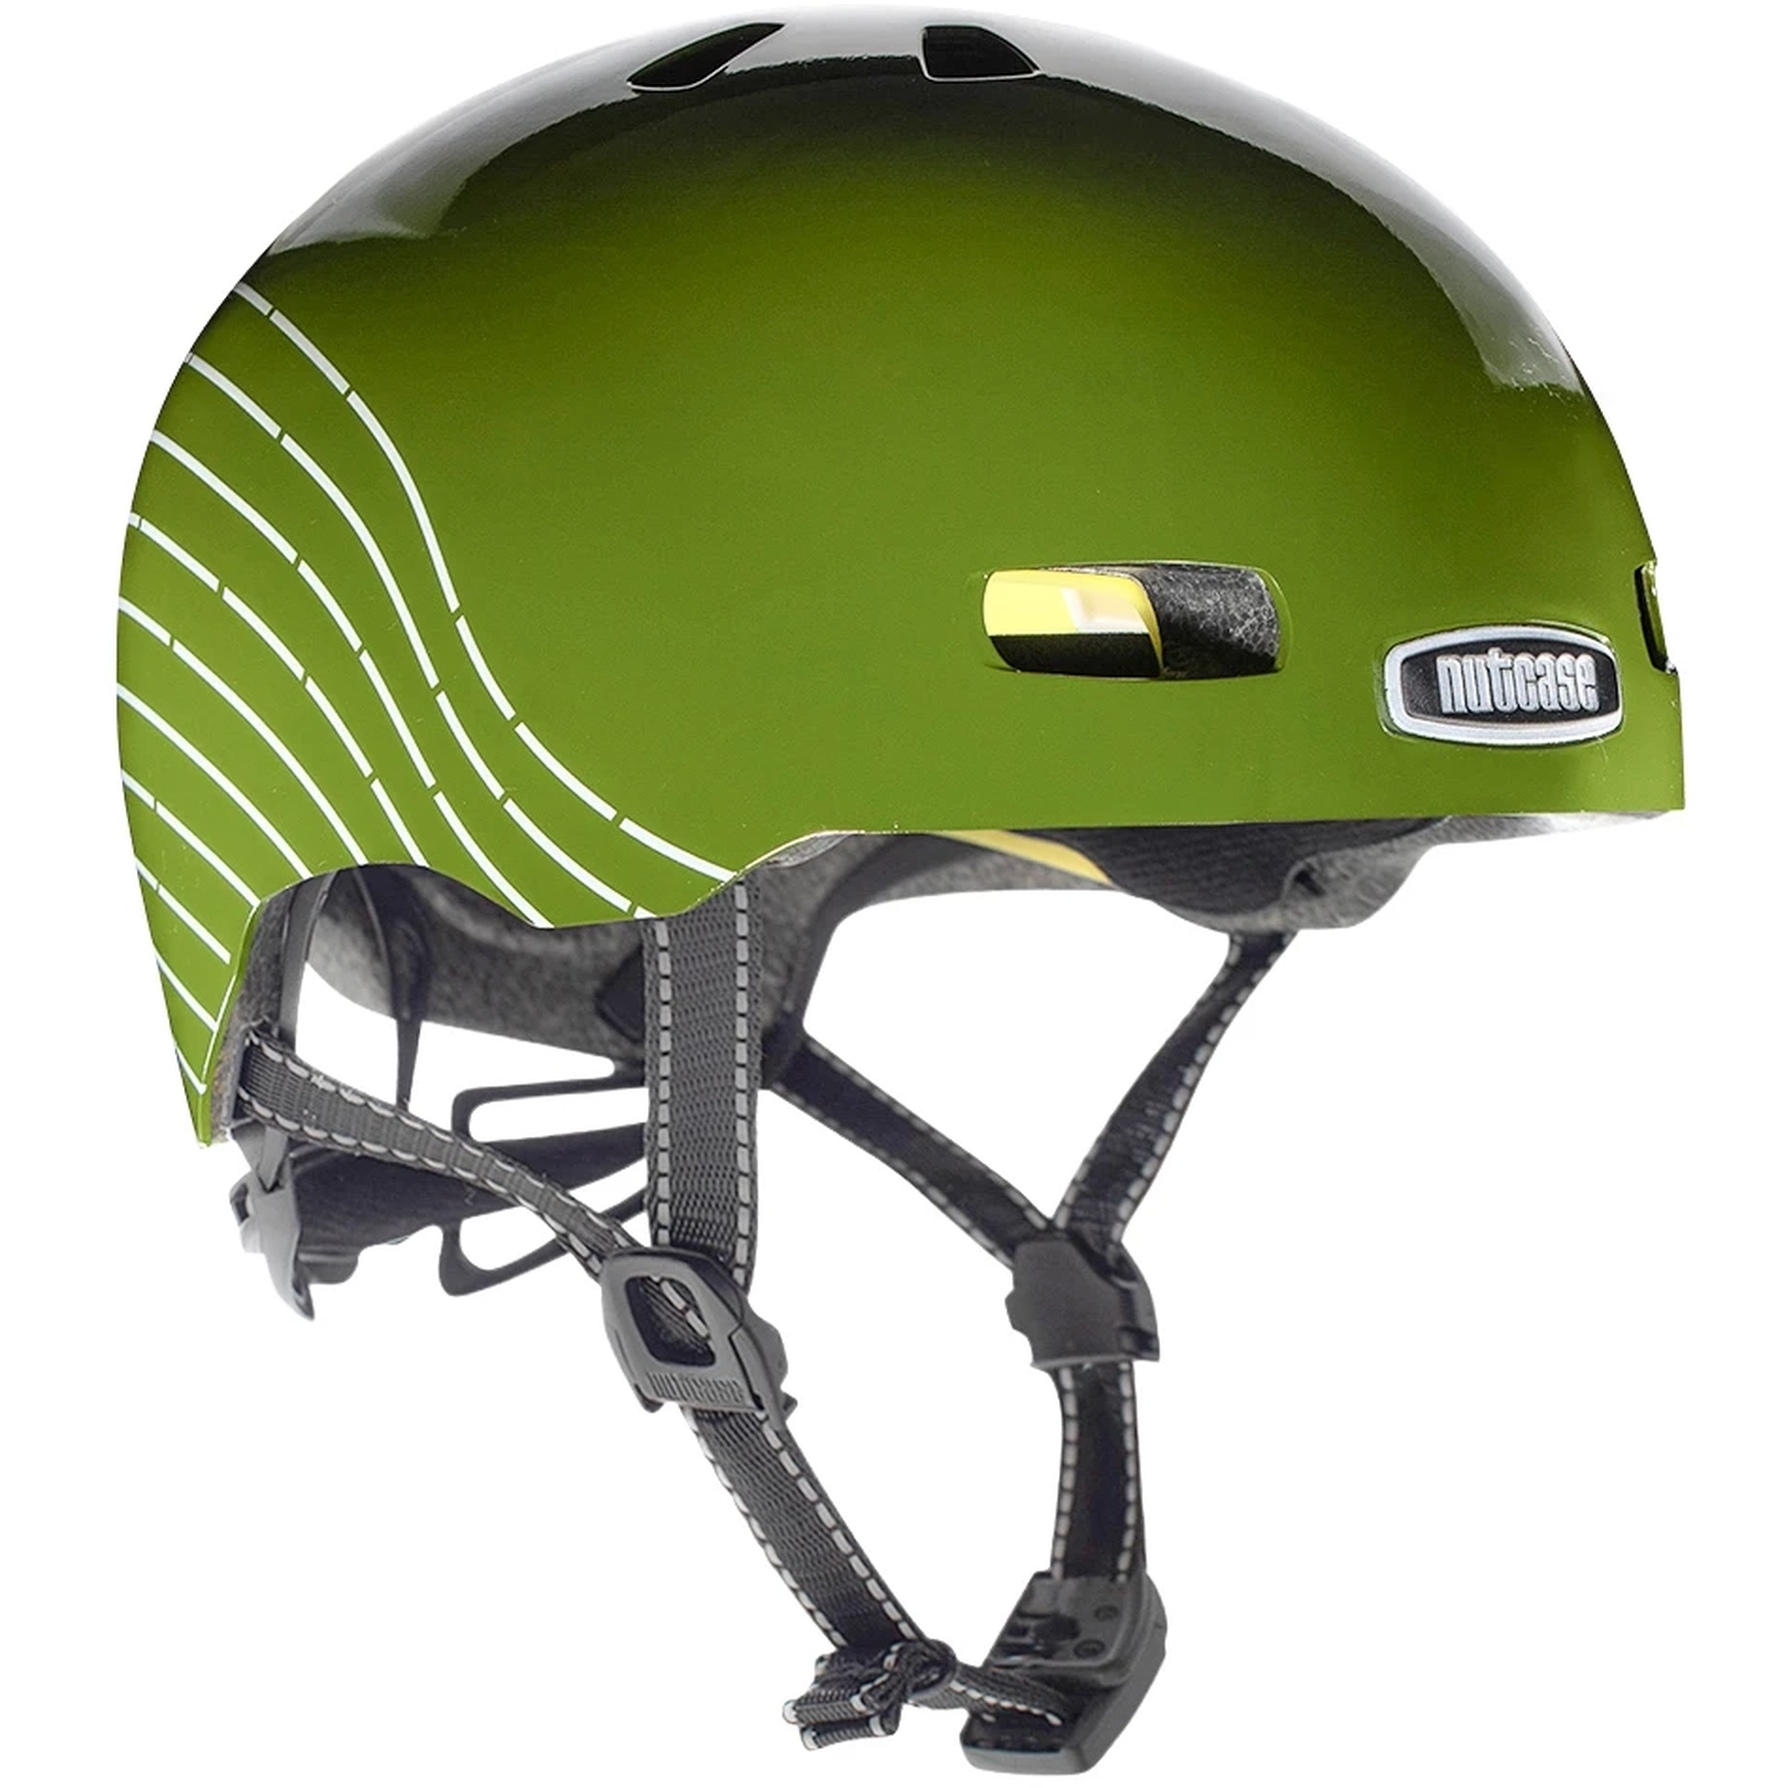 Productfoto van Nutcase Street MIPS Helmet - Dust for Prints Reflective